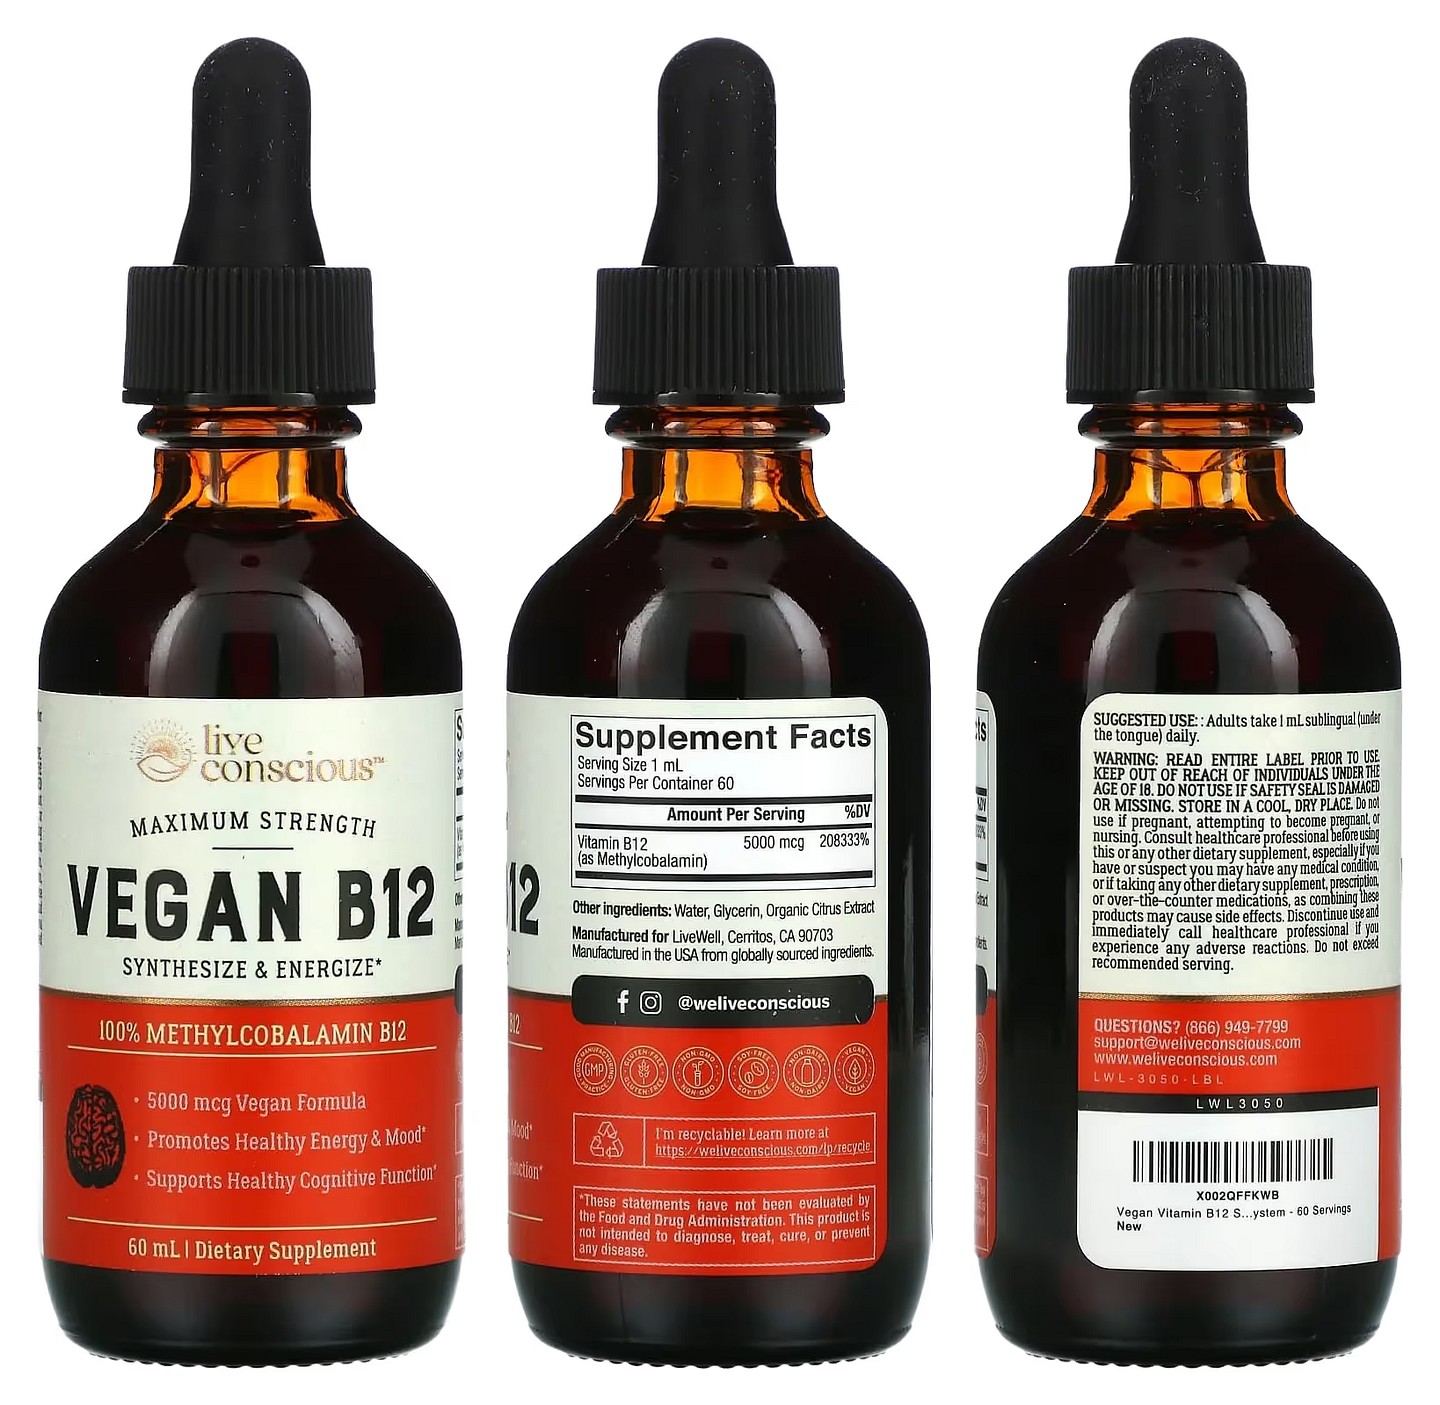 Live Conscious, Vegan B12, Maximum Strength packaging